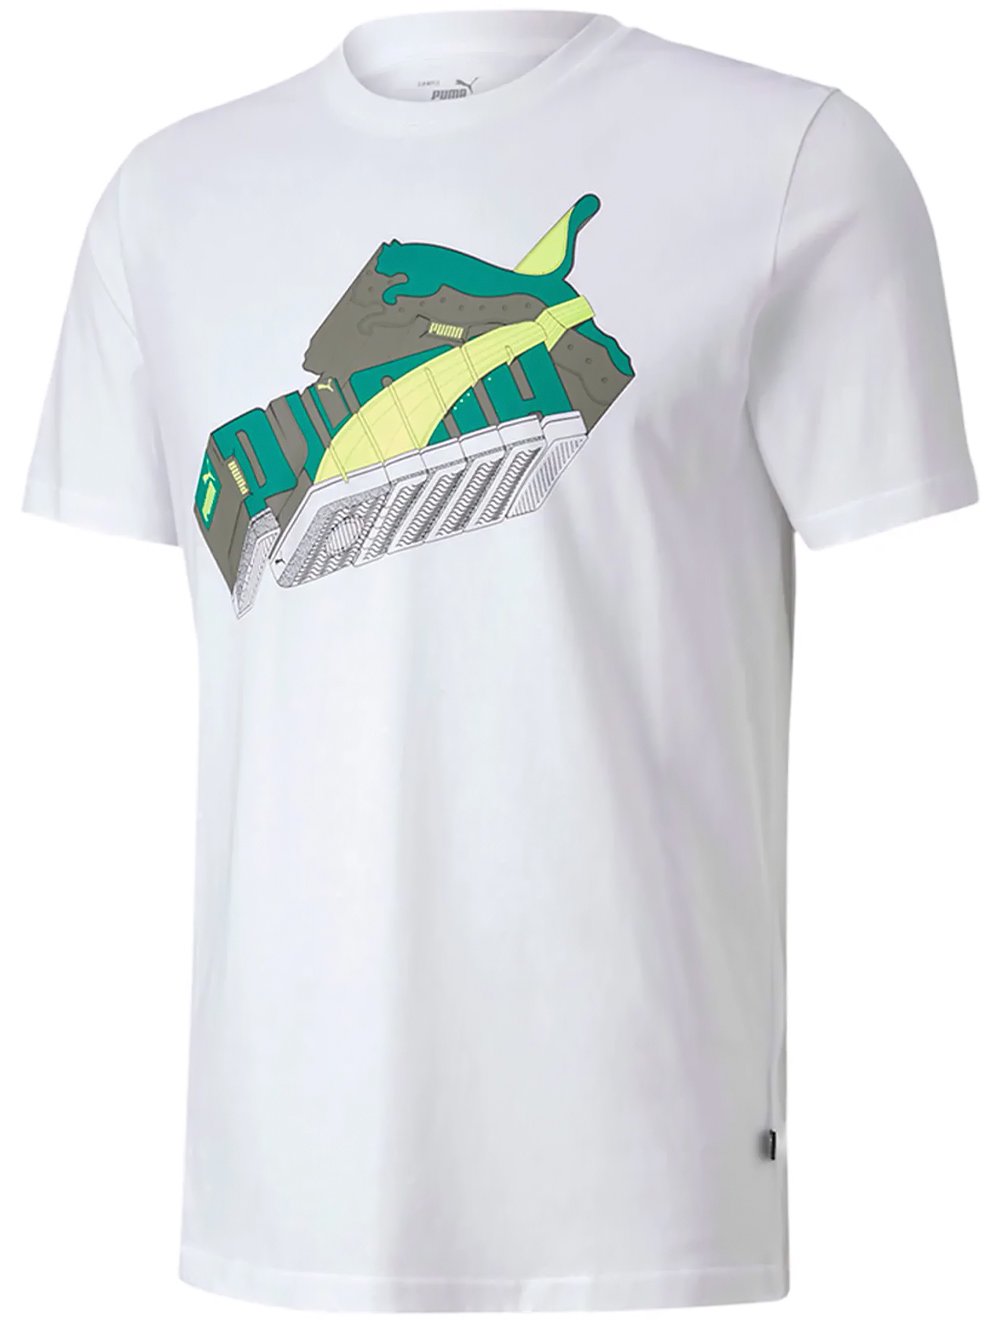 Camiseta Puma Masculina Sneaker Inspired Branca